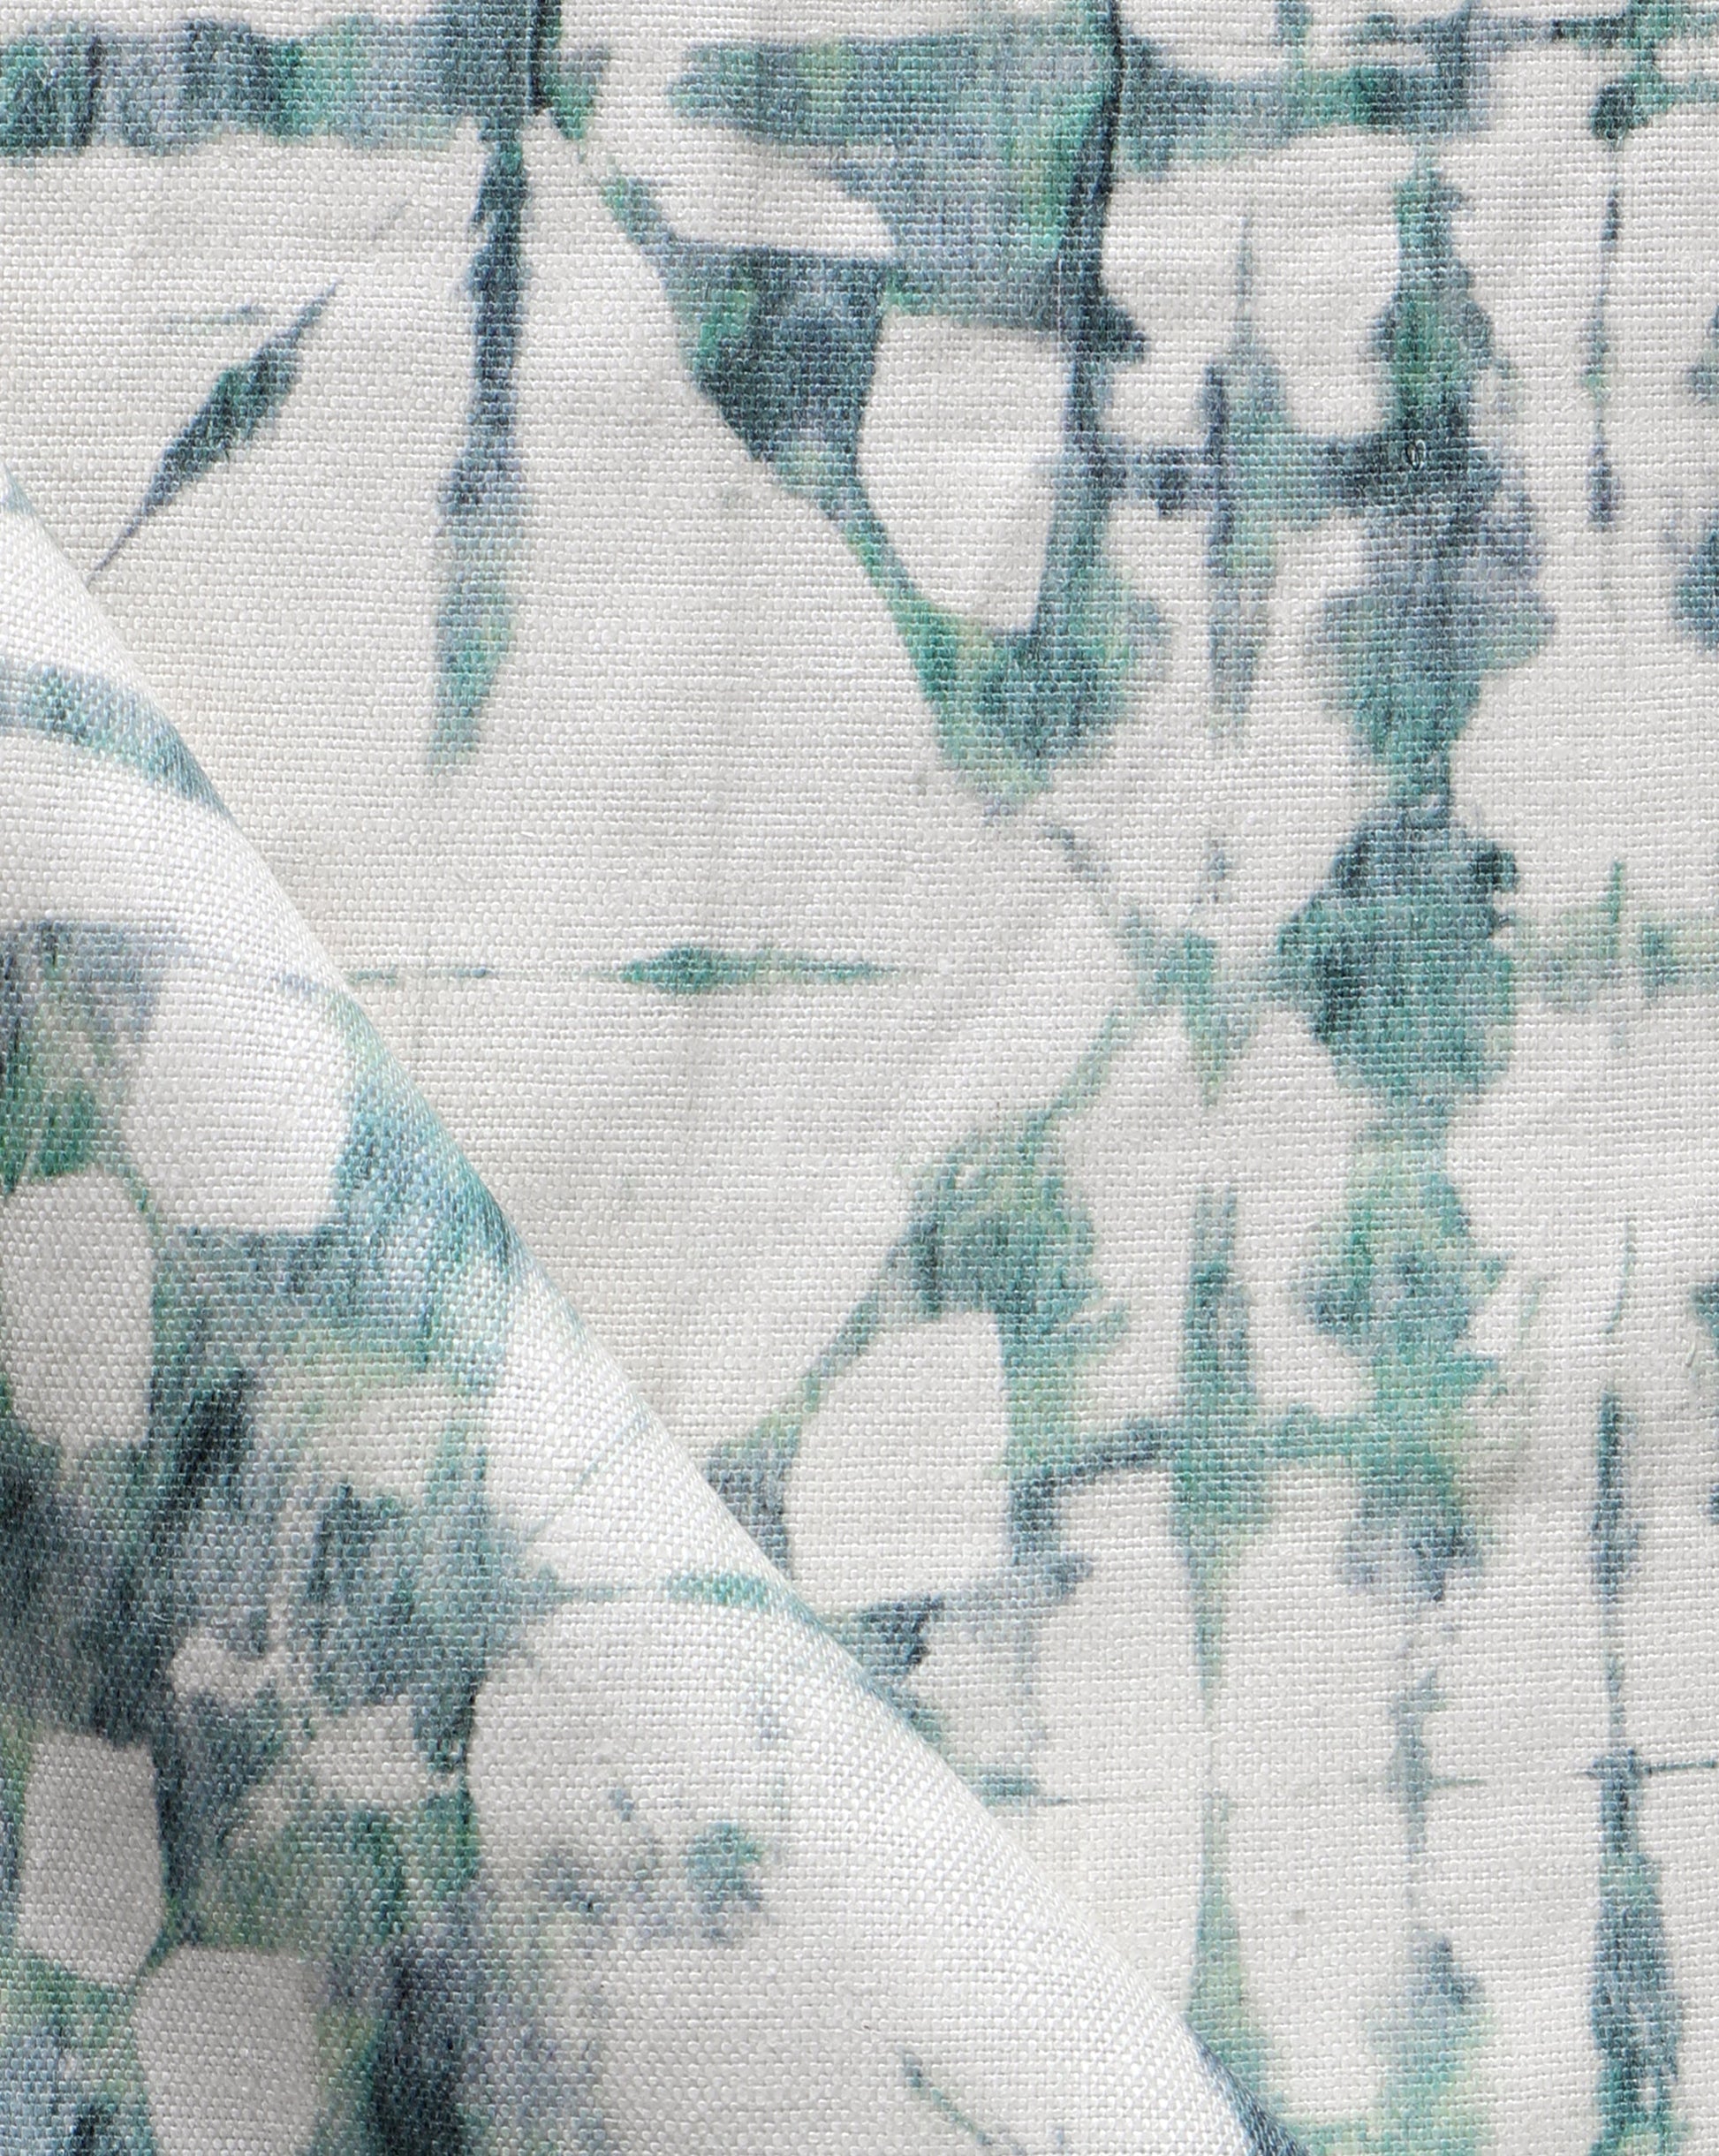 A close up of a Banda Fabric Chloros using shibori tie-dye techniques